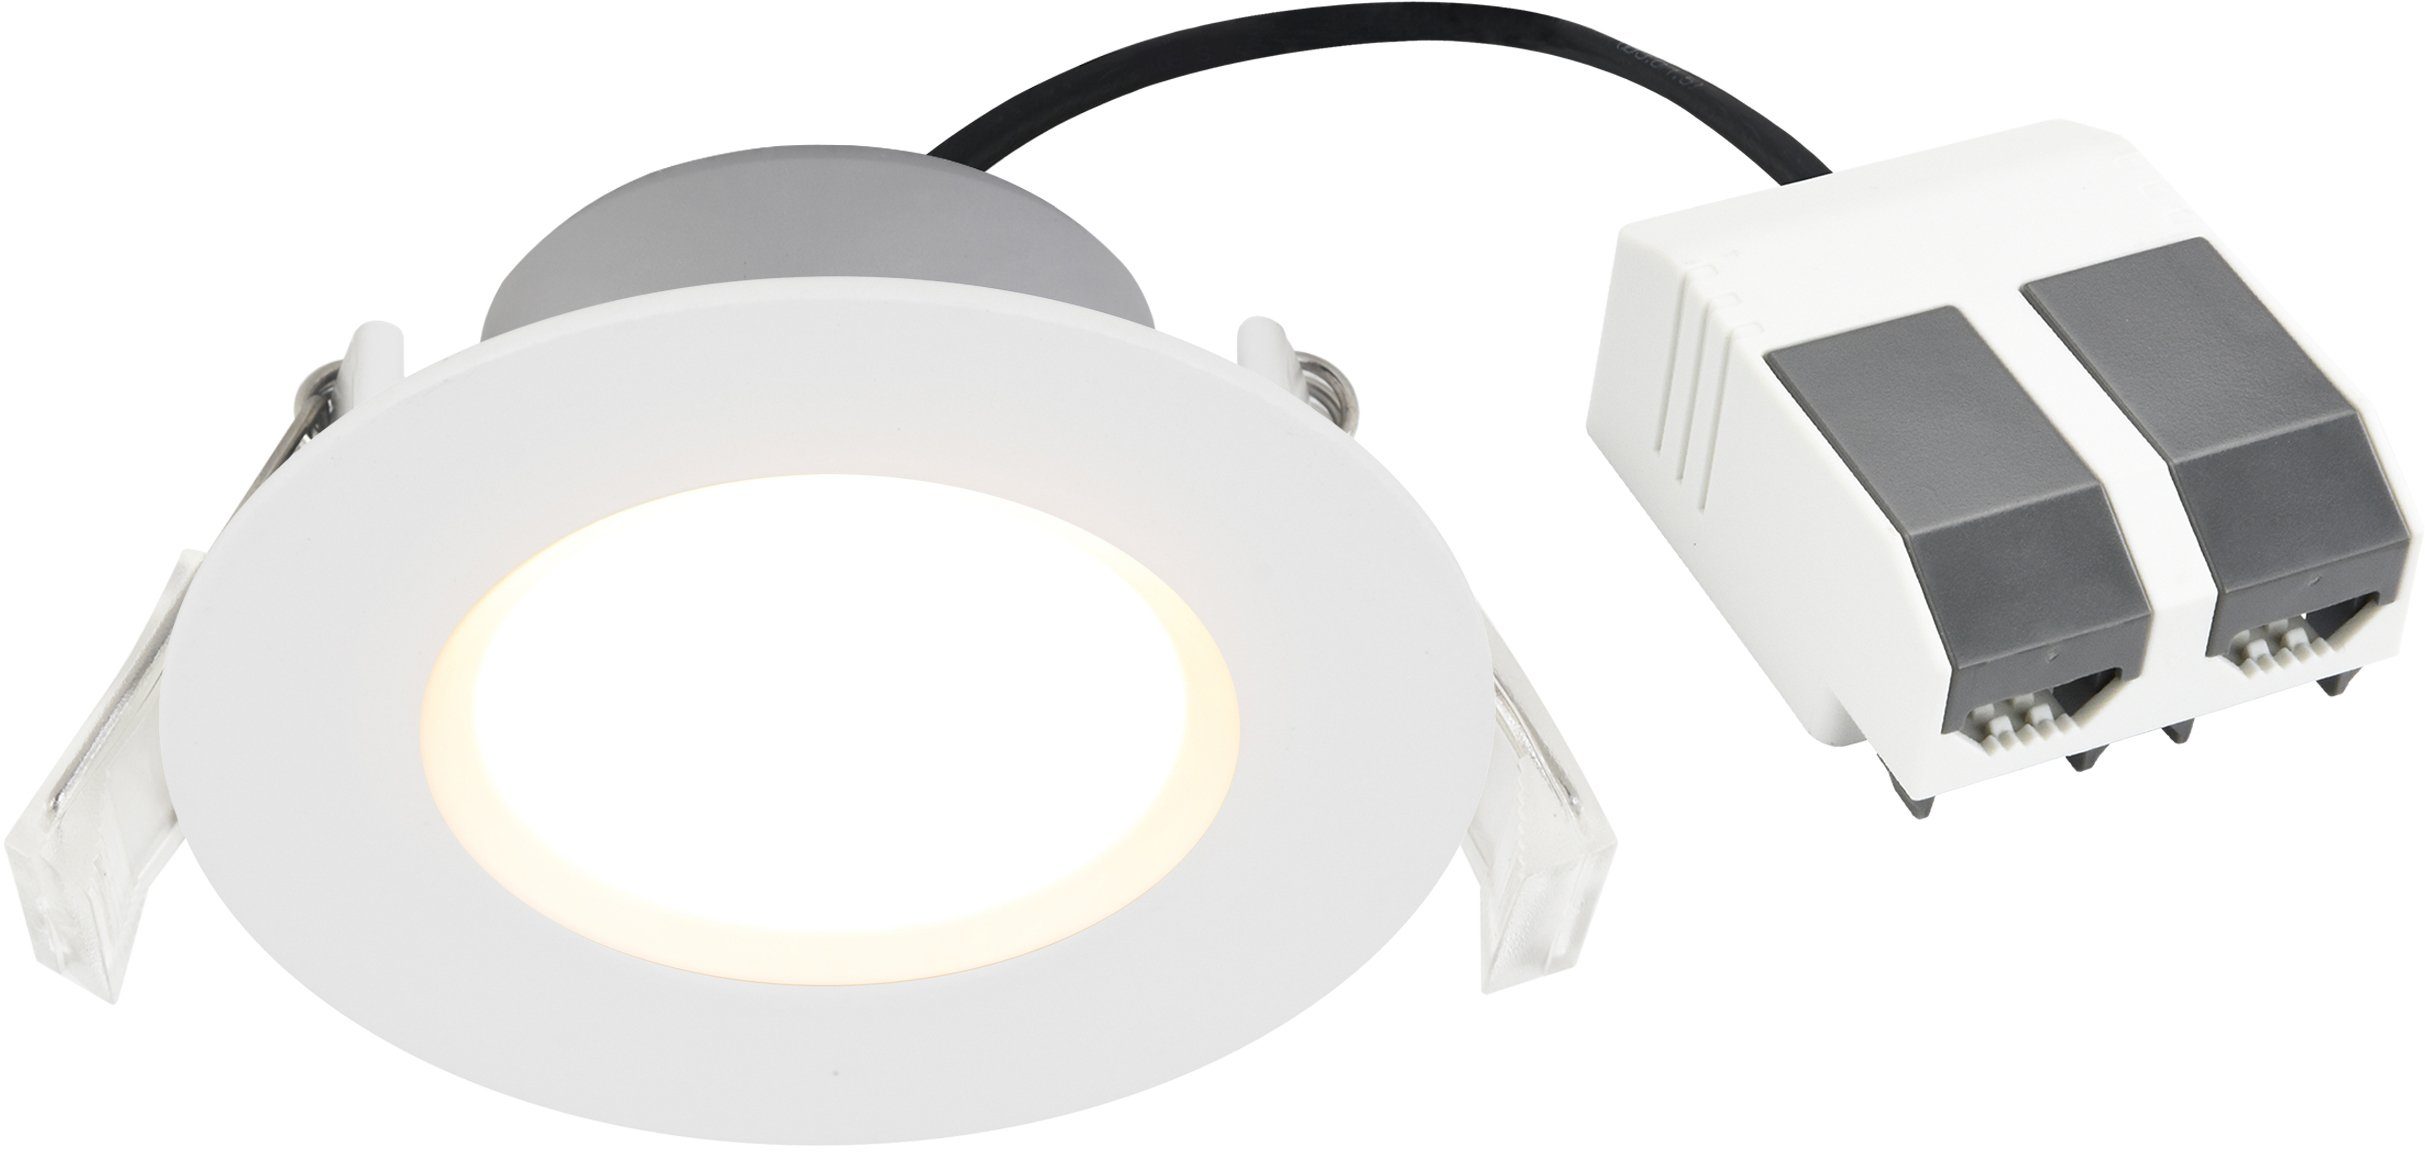 Nordlux Deckenstrahler Siege, LED fest 345 4,7W IP65 inkl. Warmweiß, integriert, LED, Lumen